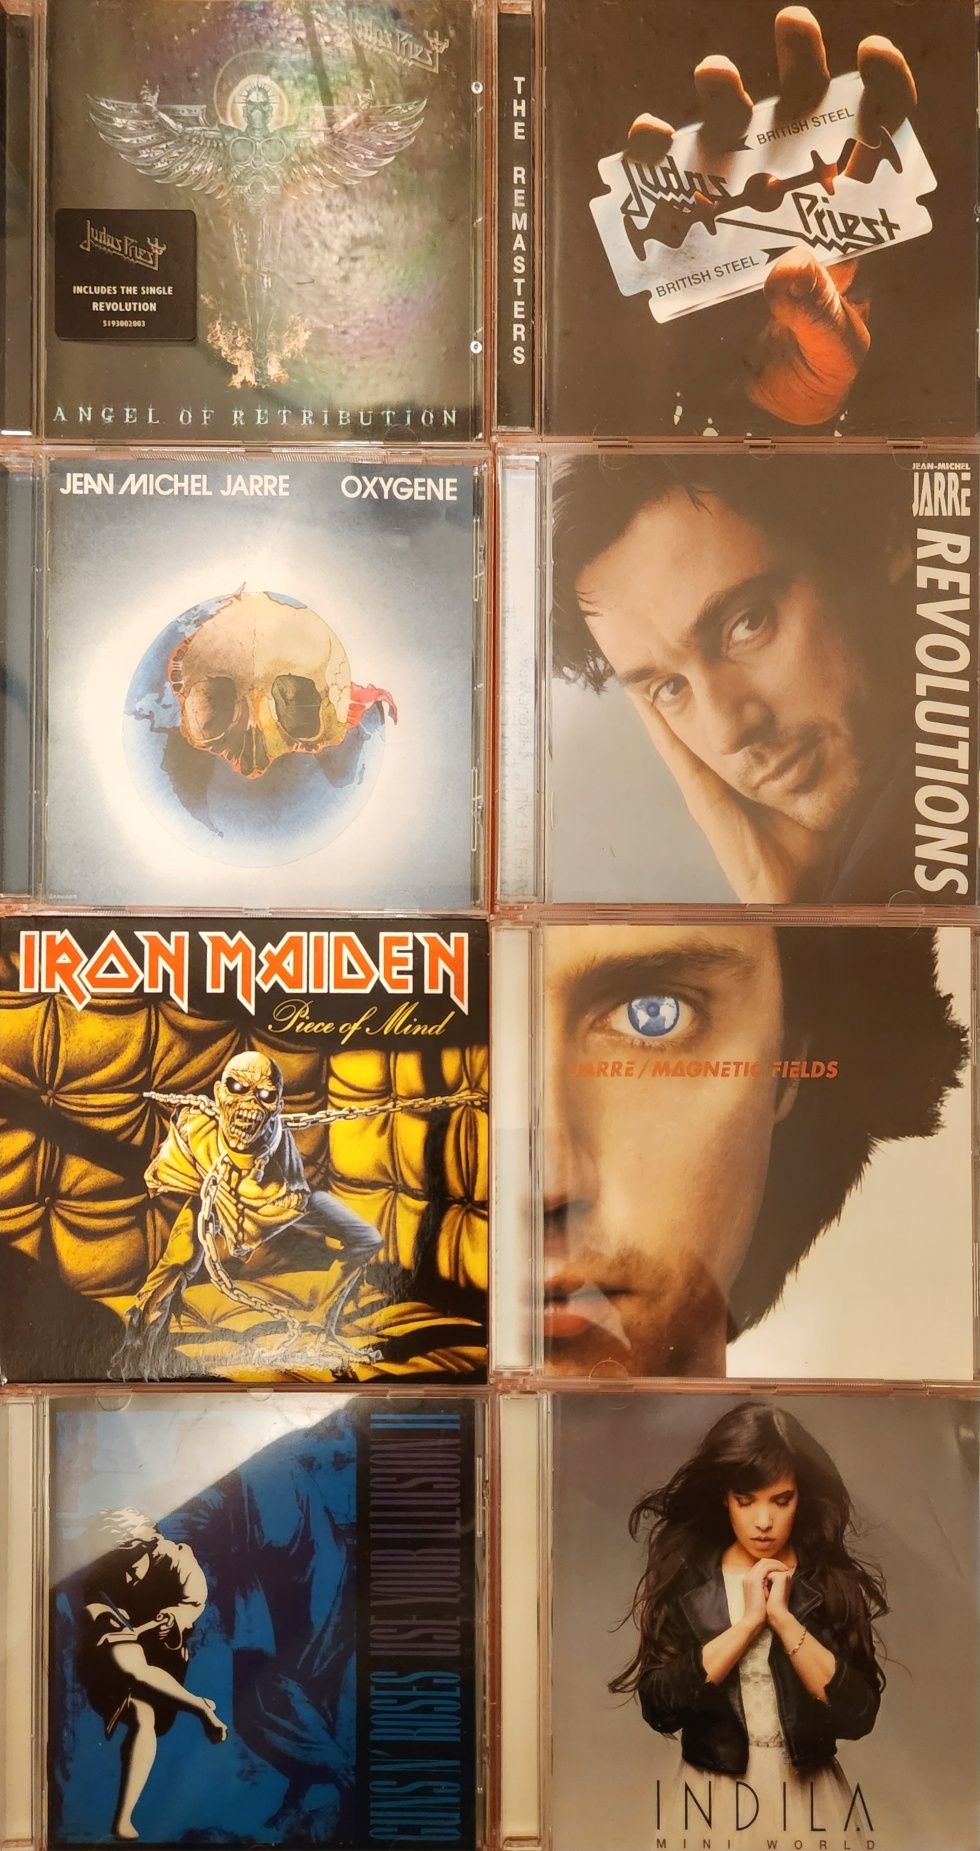 CD-uri originale muzica pop, heavy metal, soundtracks.